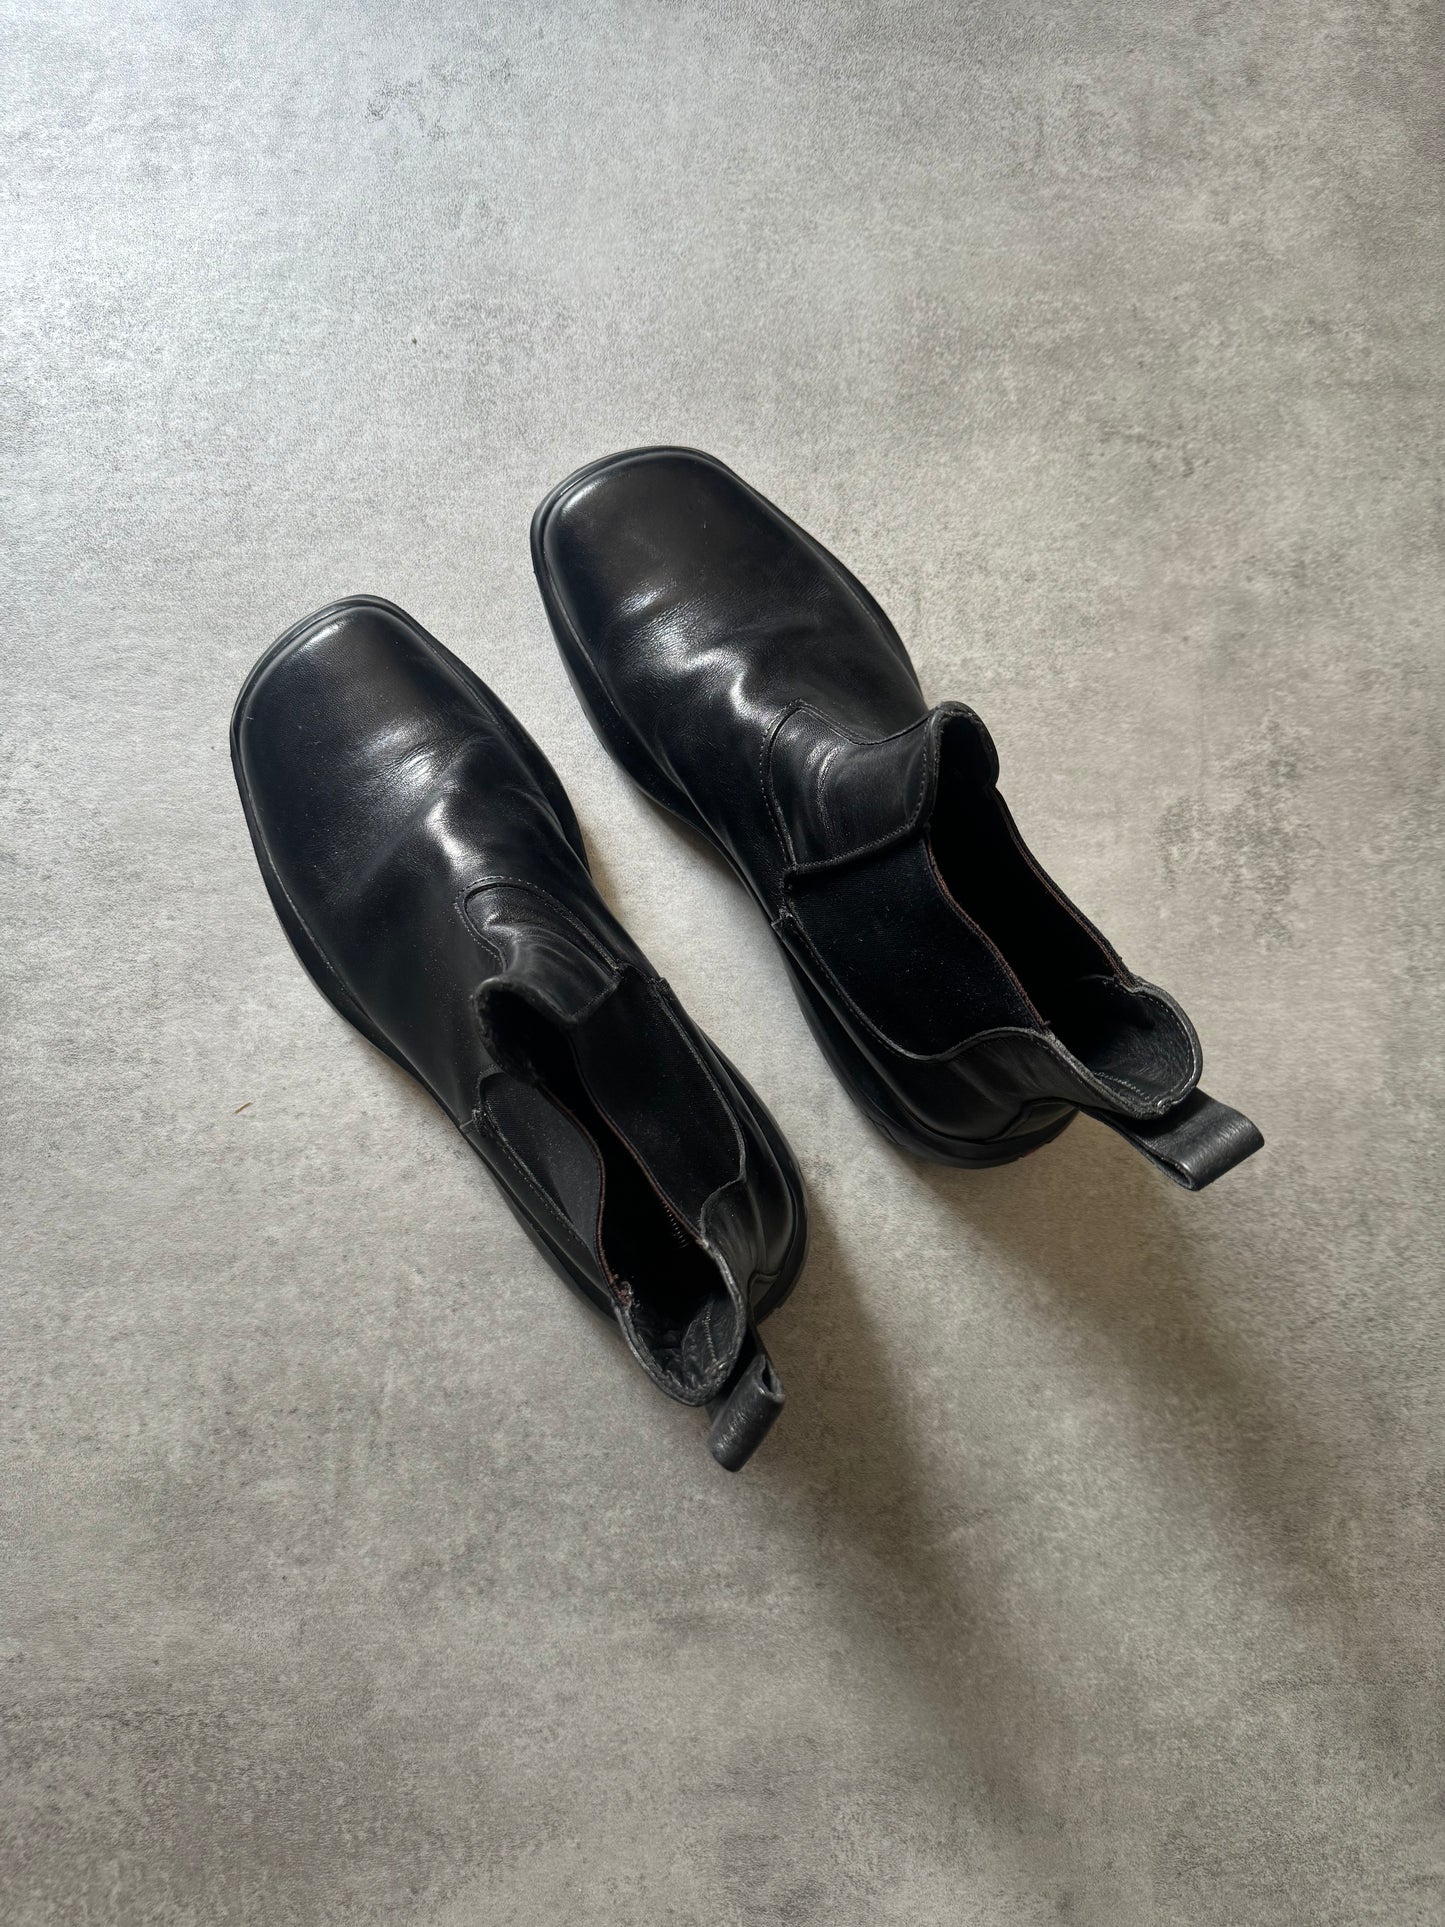 FW1999 Prada Ankle Black Leather Boots  (42,5) - 6